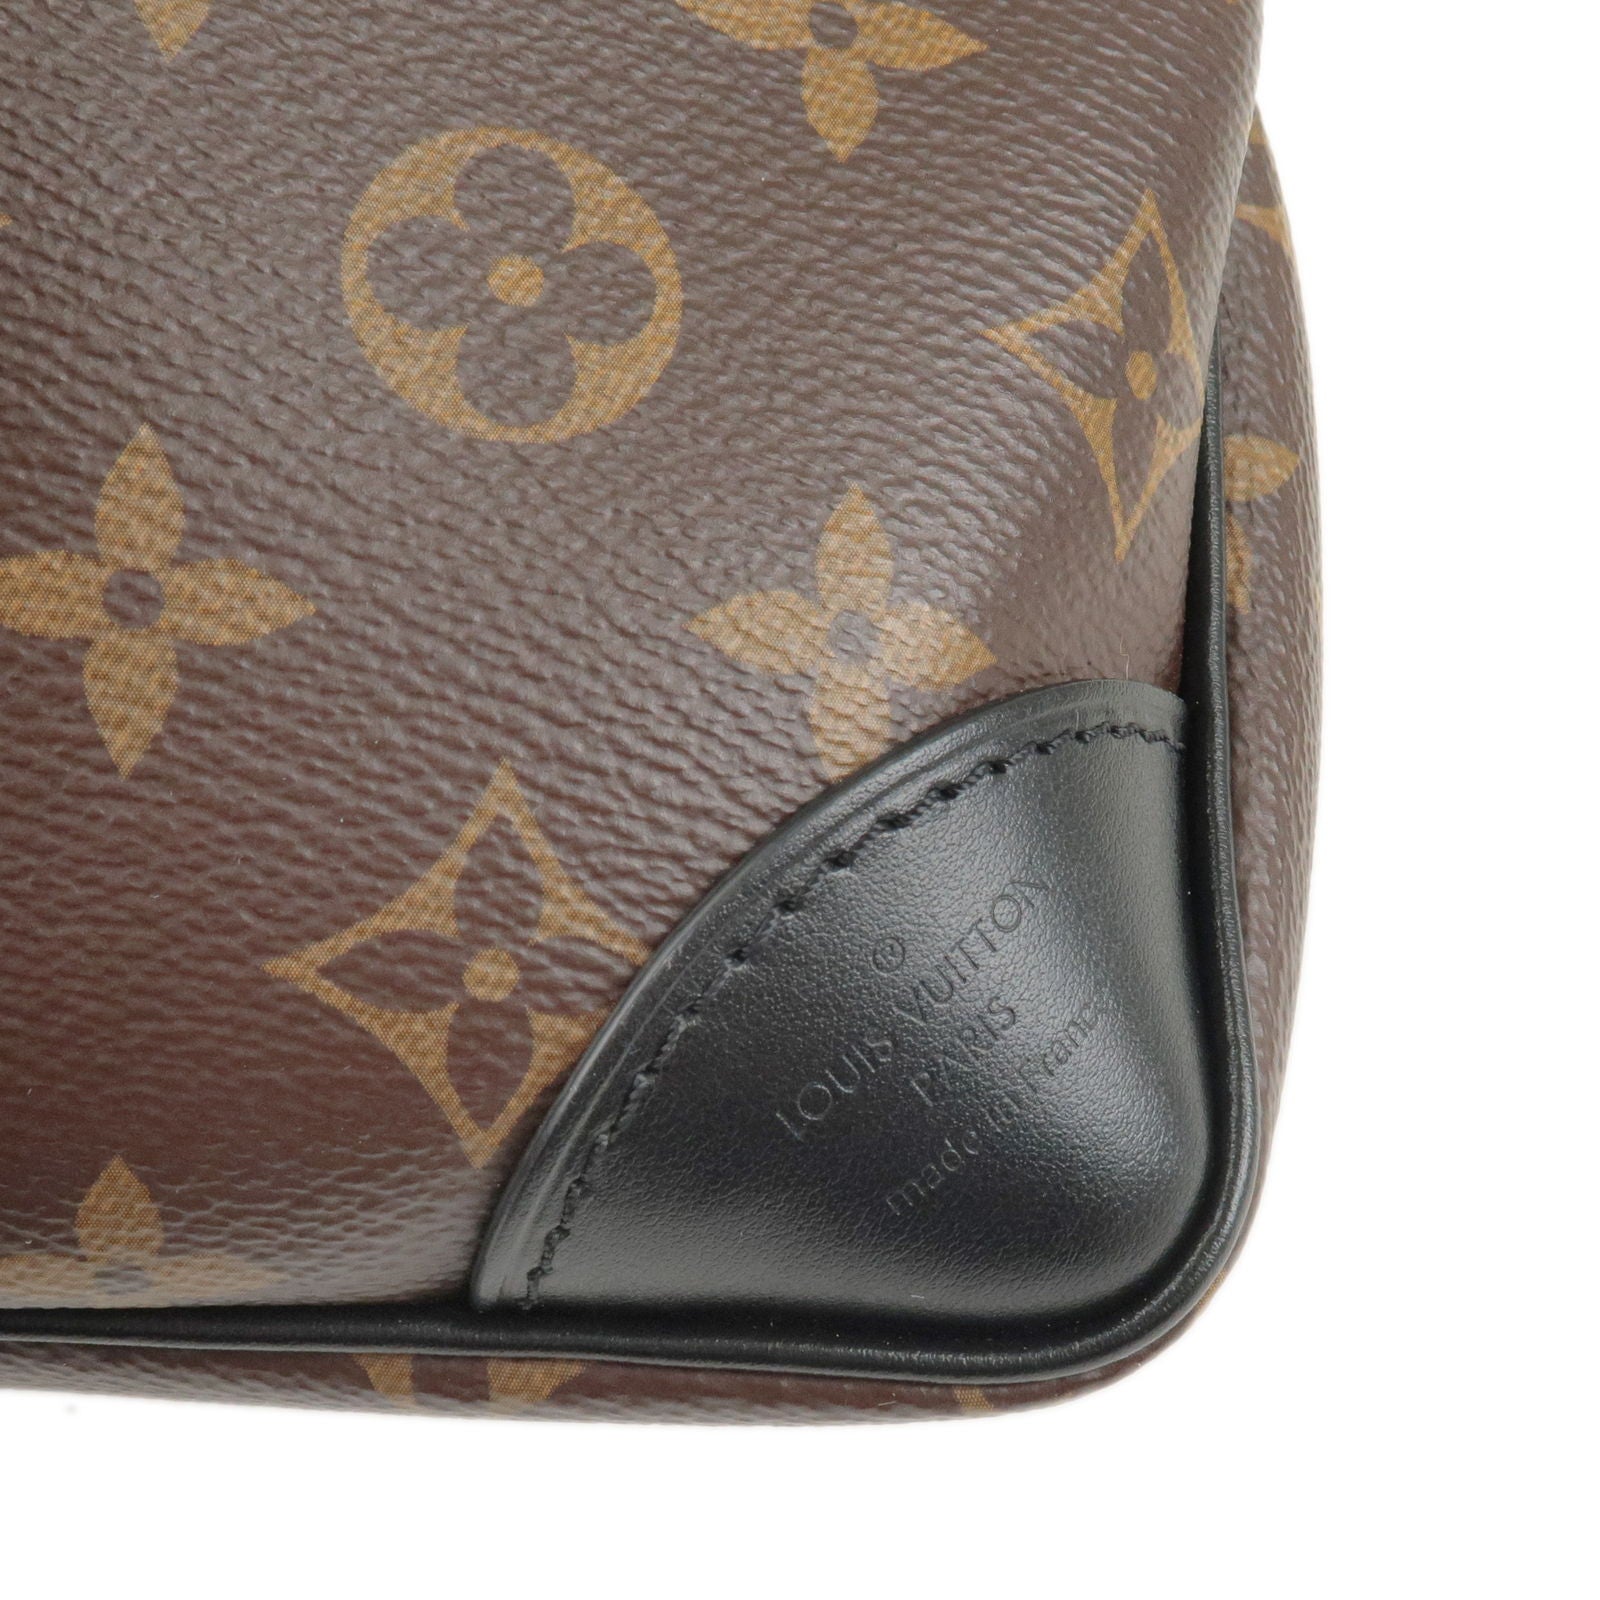 Louis Vuitton Monogram Odeon Pm M45353 Shoulder Bag